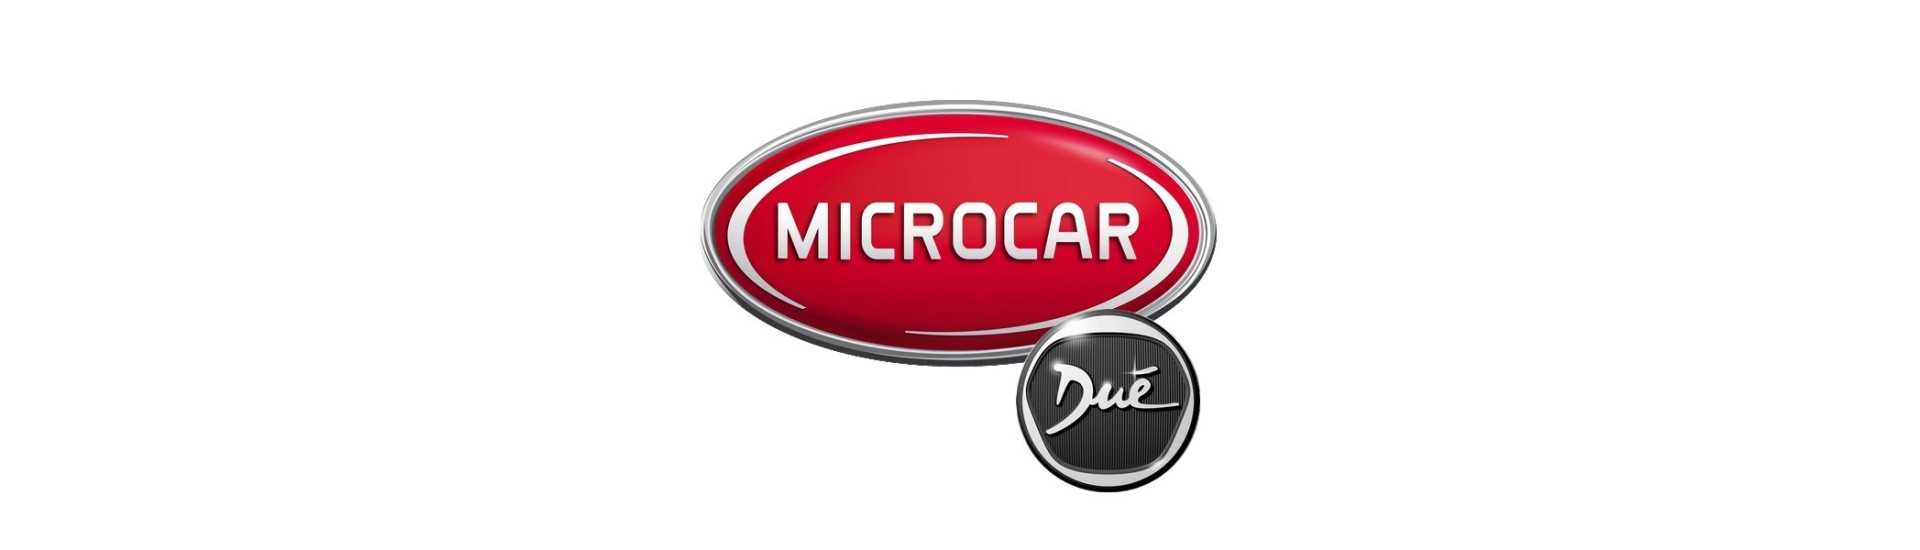 Inre dörrskylt bäst pris bil utan licens Microcar Dué